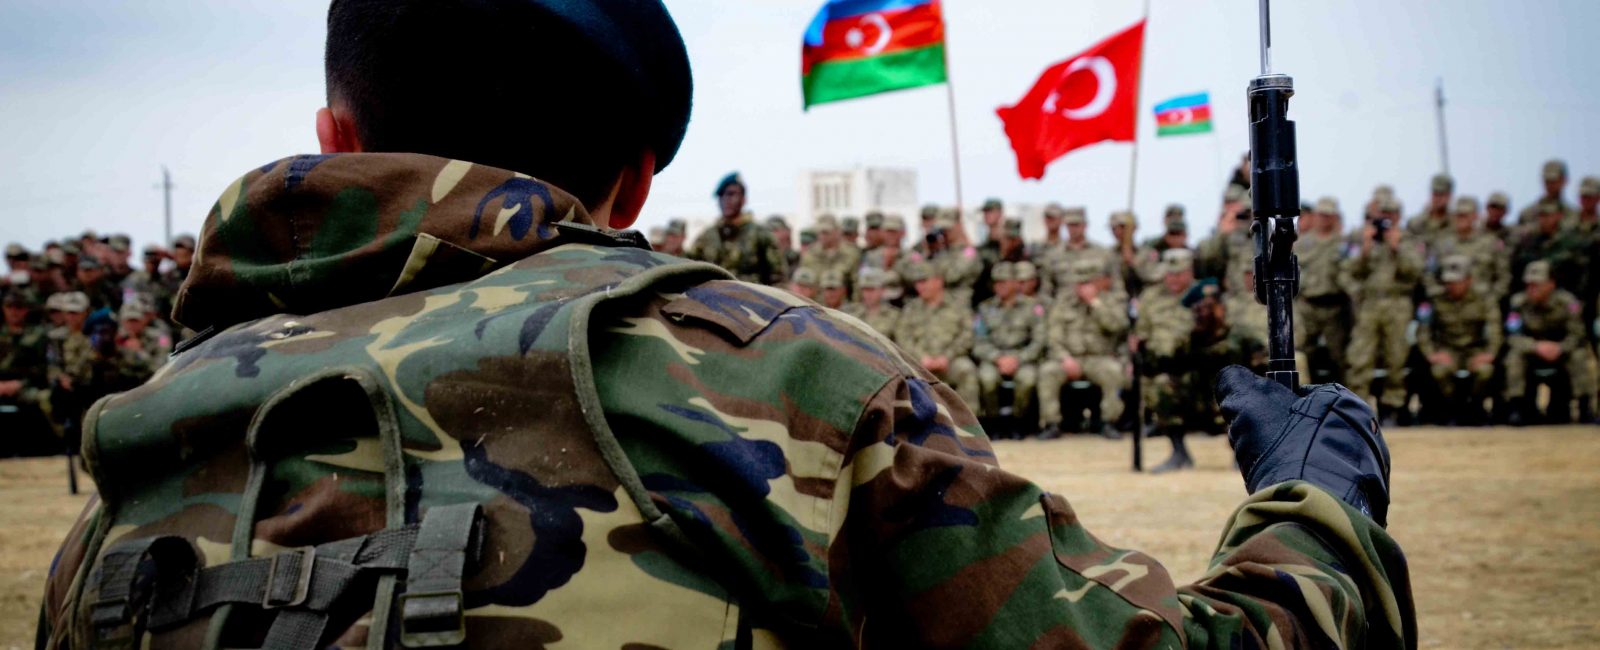 soldat na fone flaqov Azerbaijana i Turcii